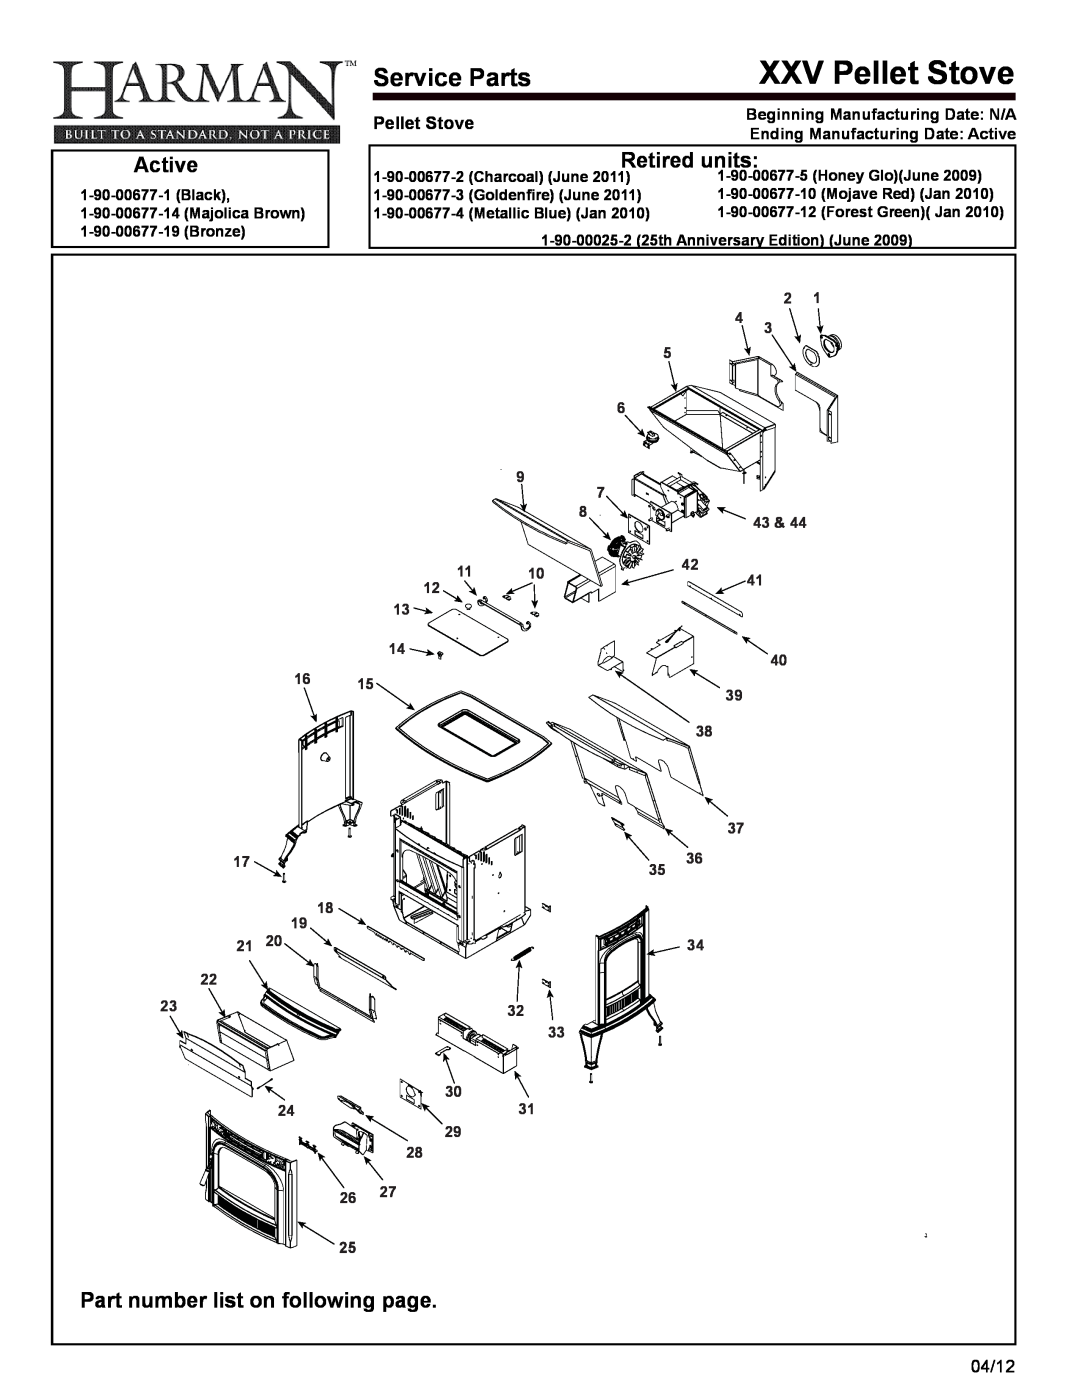 Harman Stove Company R16 manual XXV Pellet Stove, Service Parts 